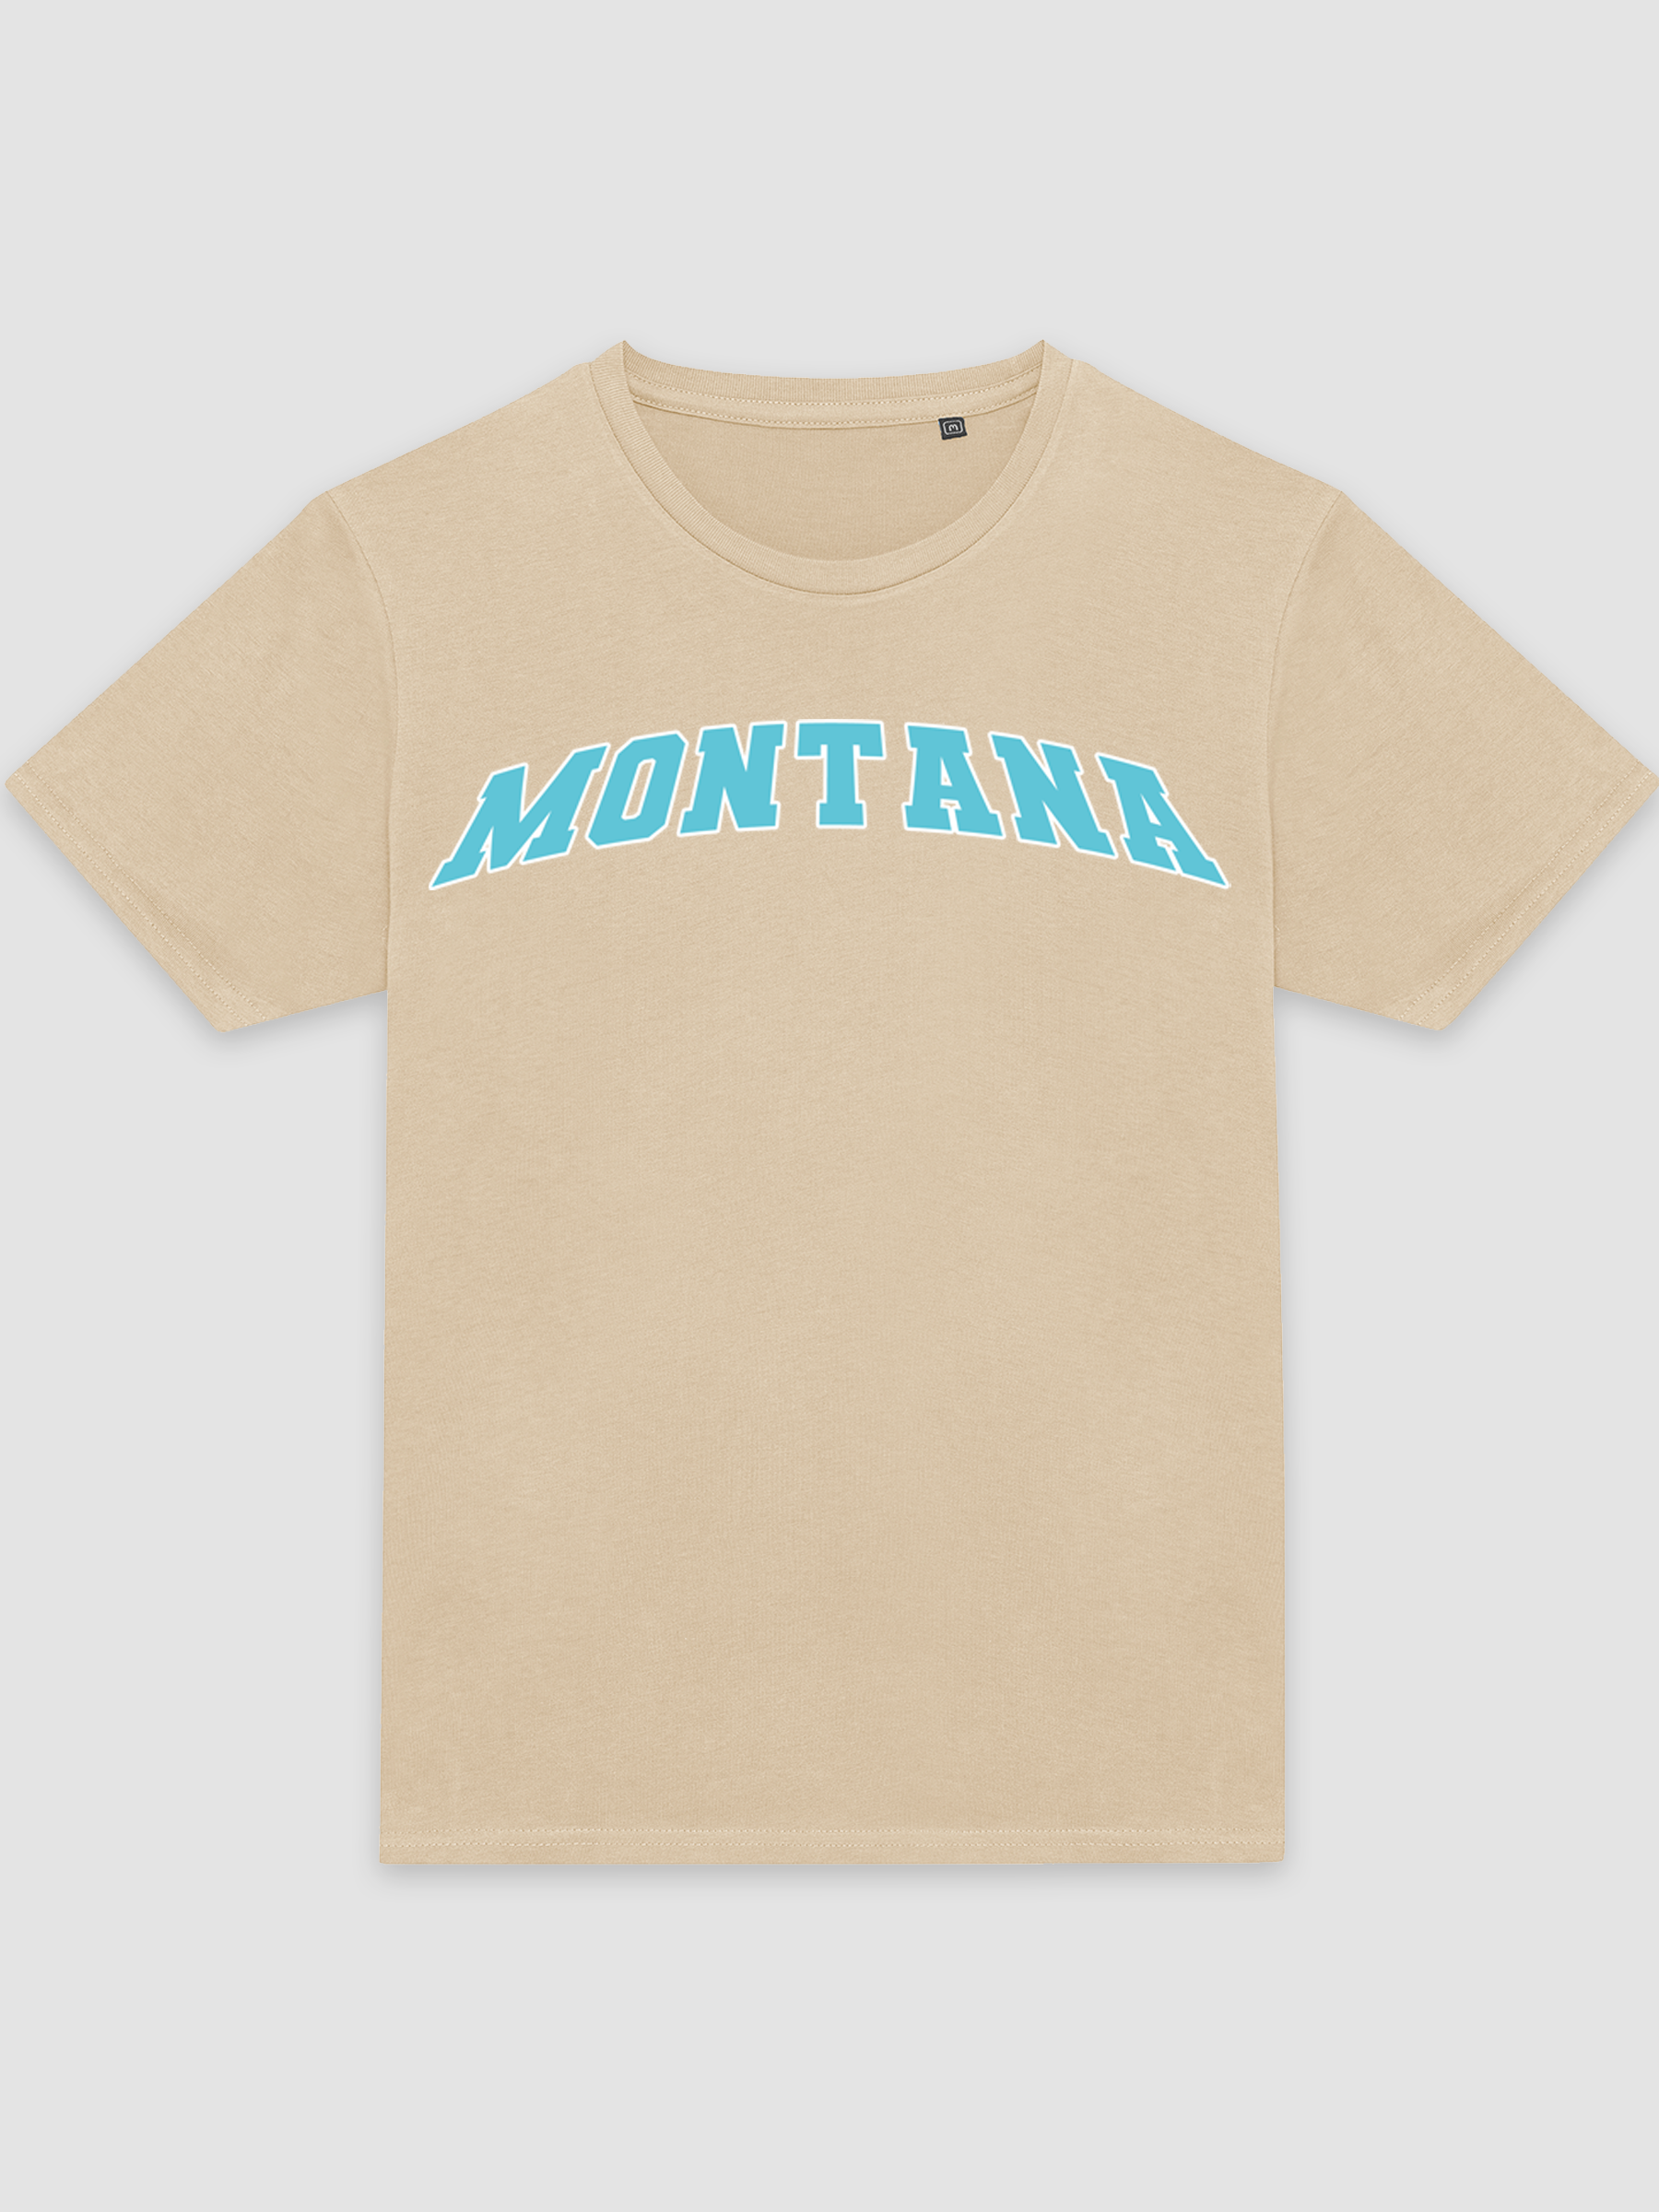 Montana - Sand T-Shirt